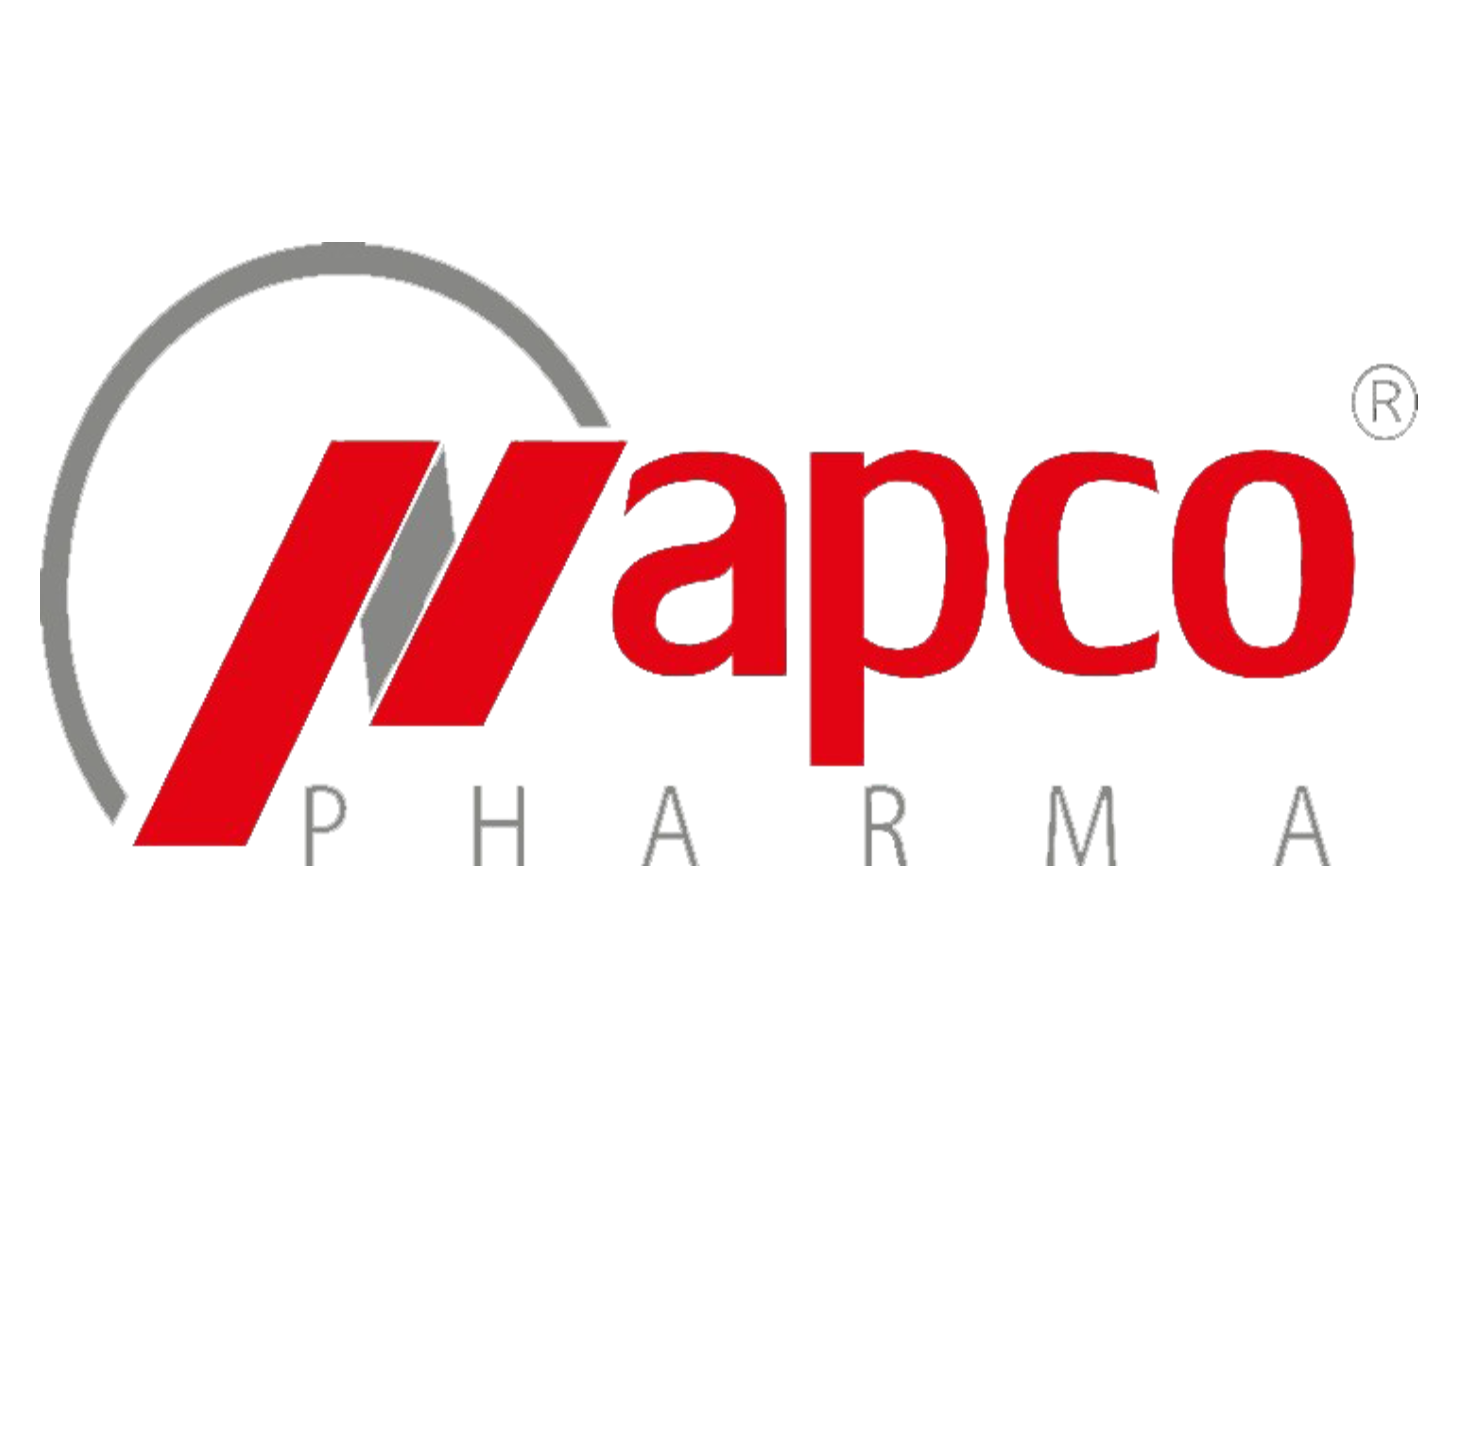 Napco pharma